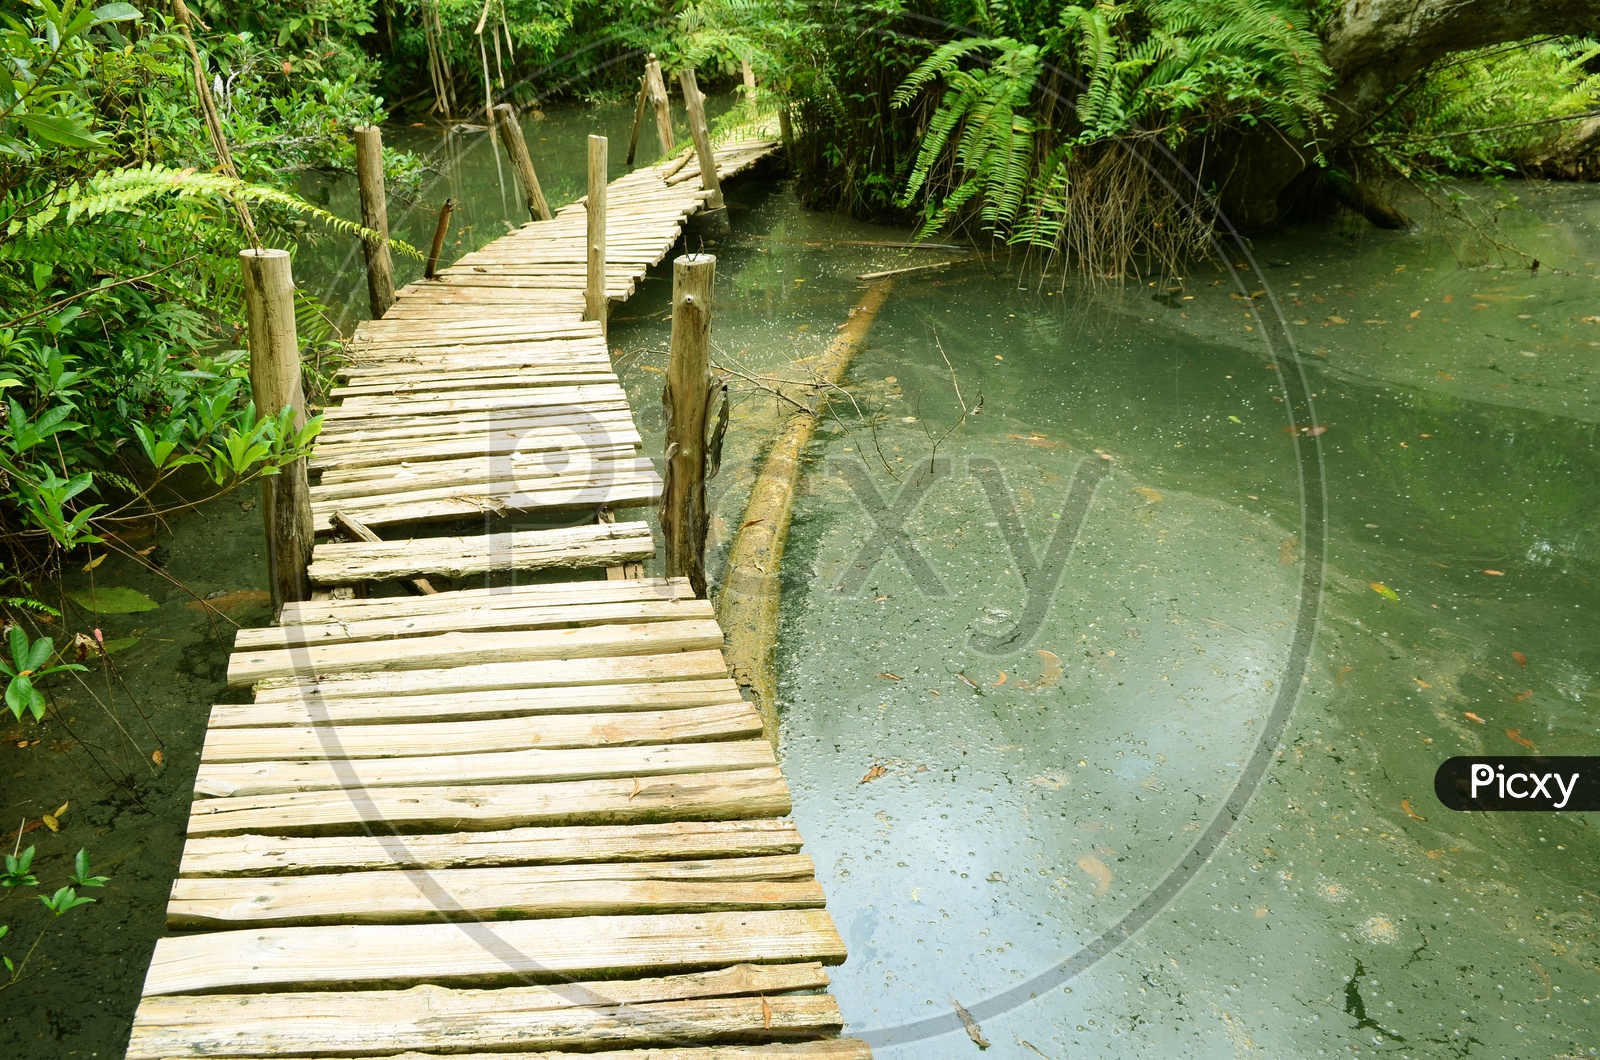 A wooden boardwalk along the Mangrove forest, Thailand